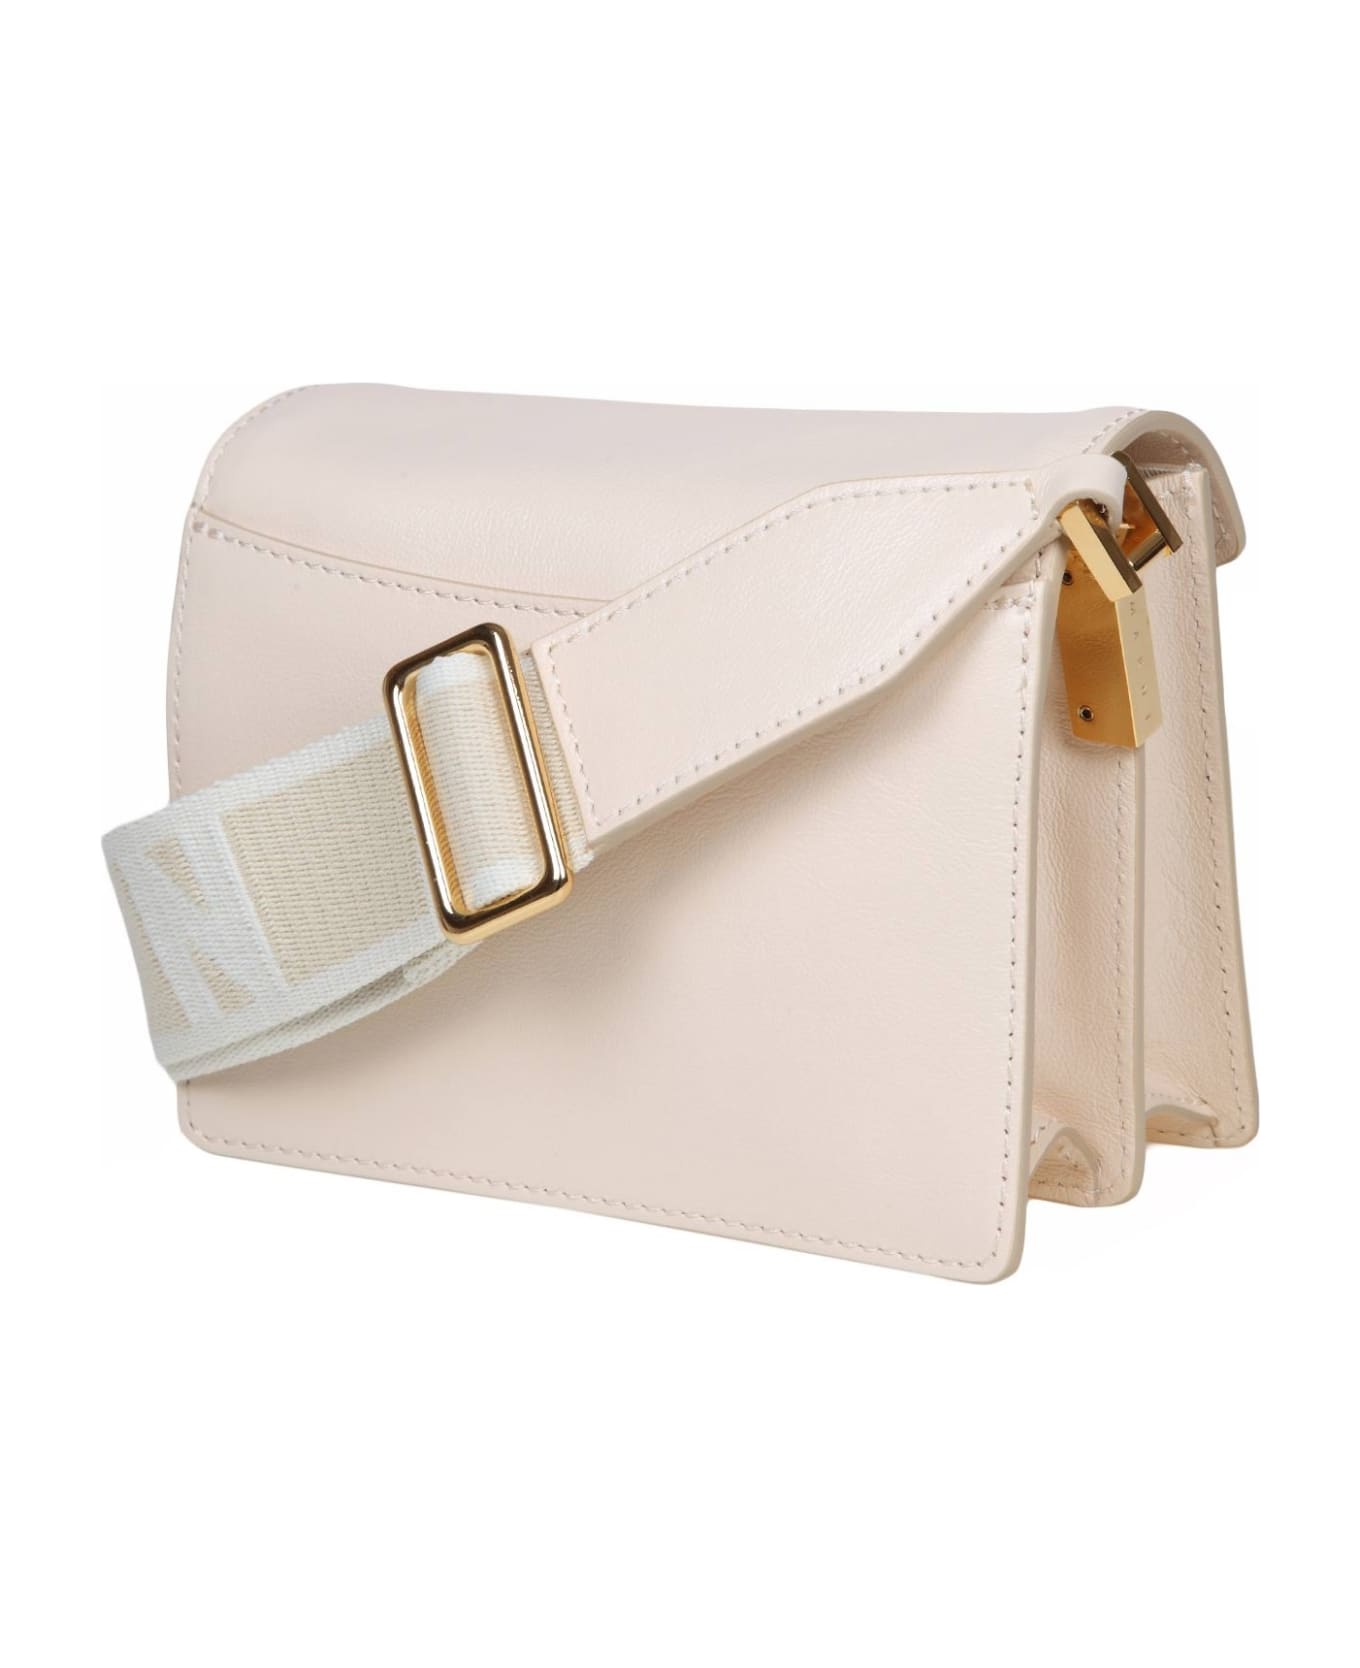 Marni Small Trunk Soft Shoulder Bag In Cream Color Leather - Cream